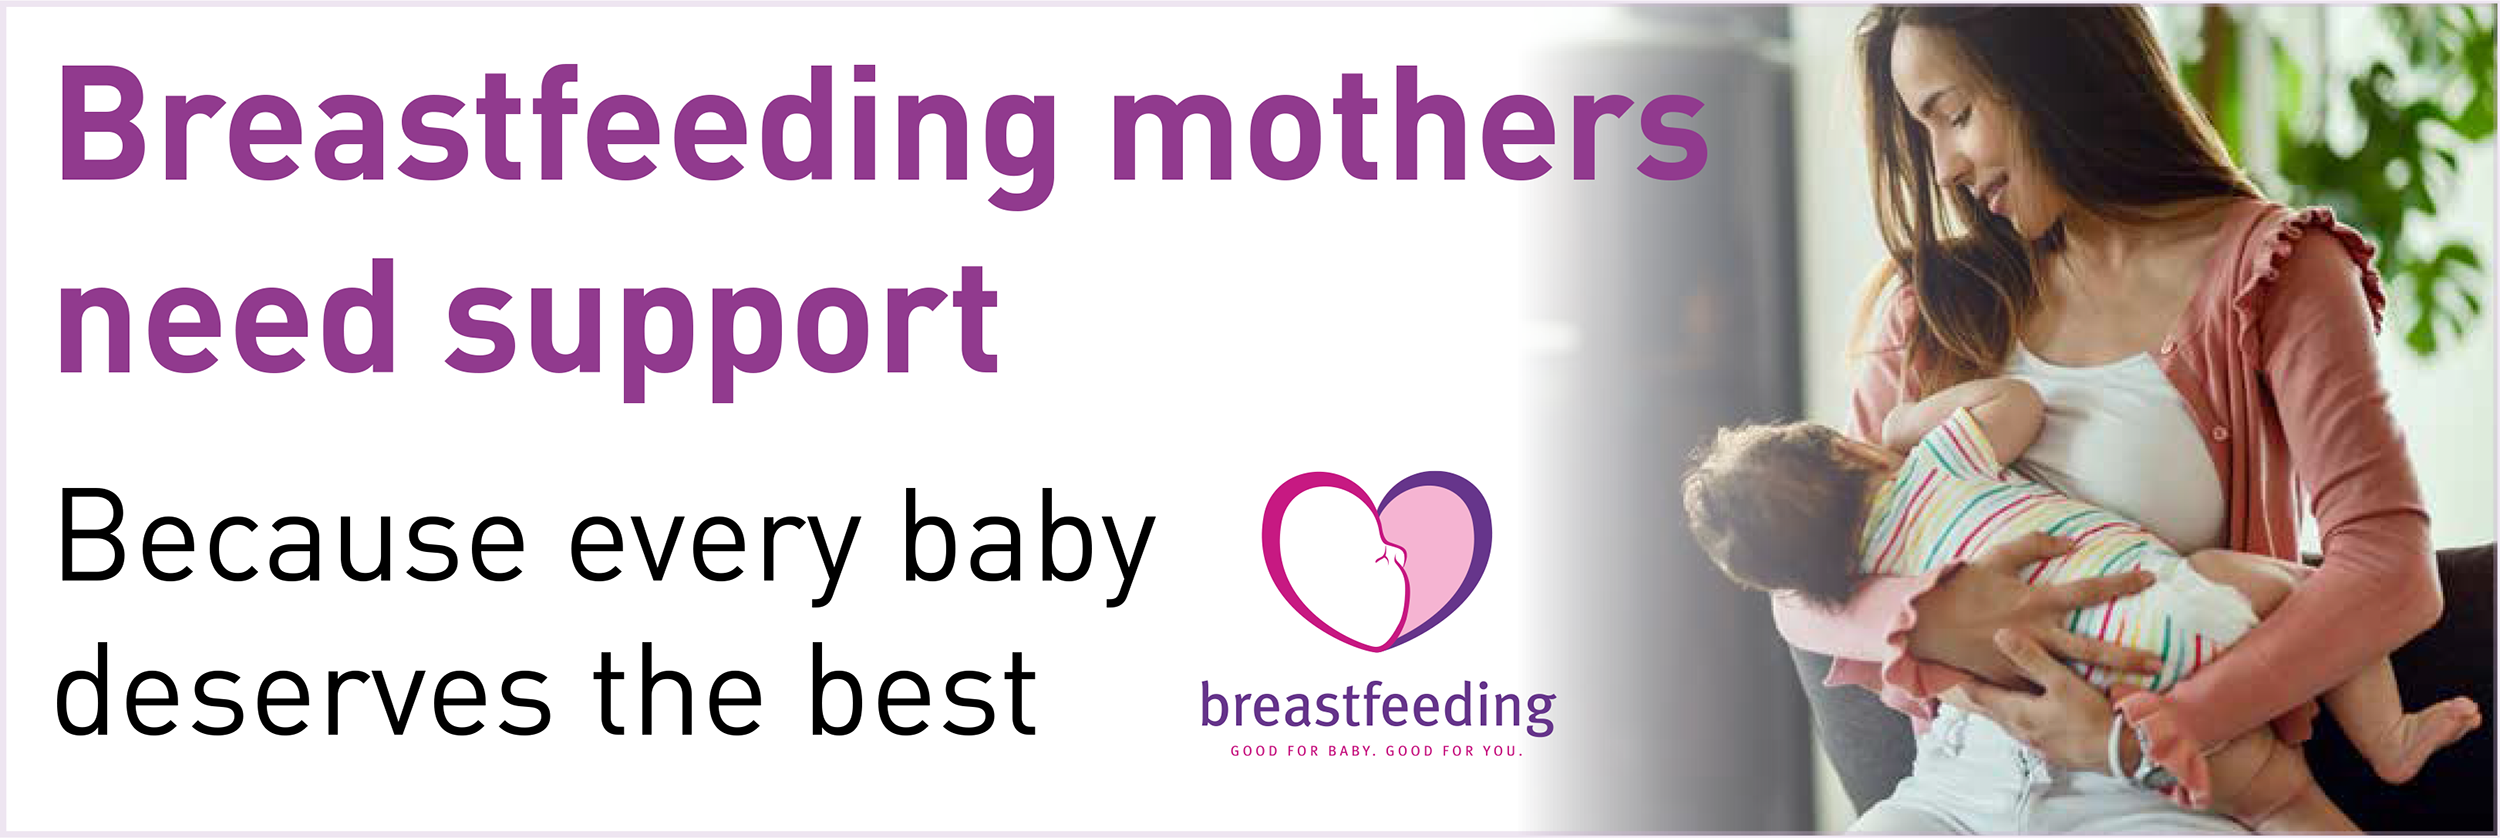 Breastfeeding campaign banner